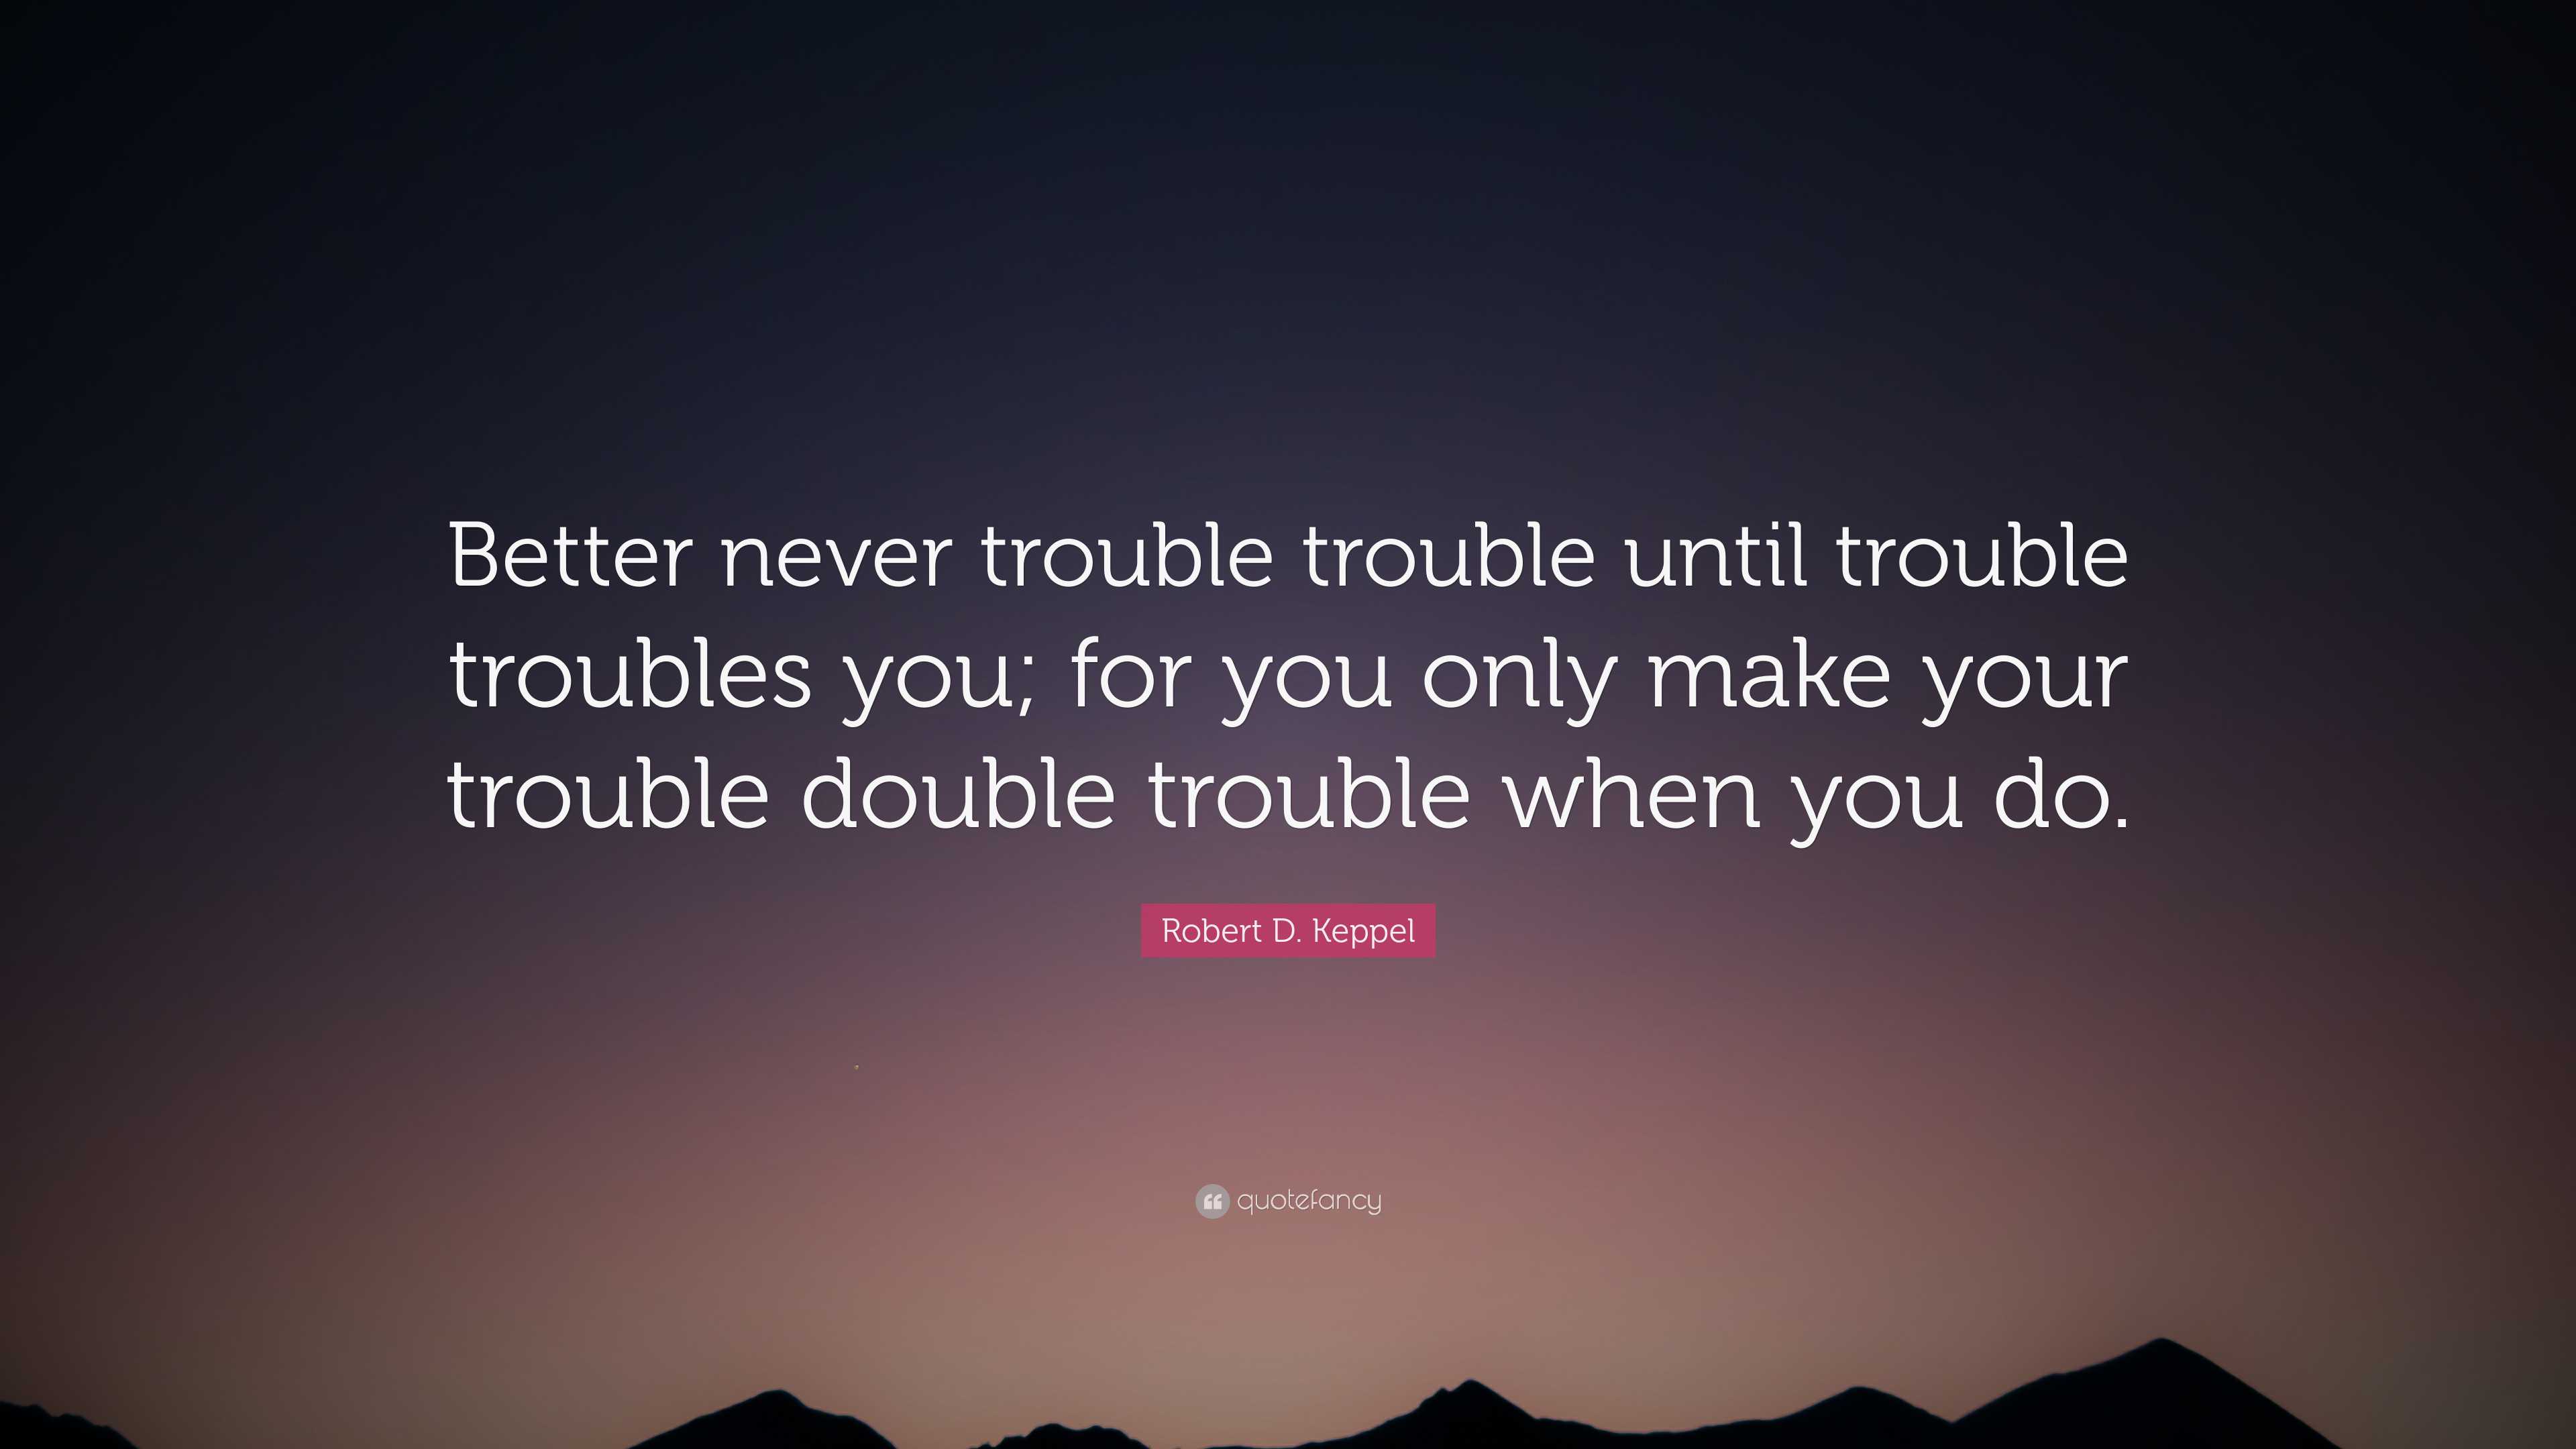 Robert D. Keppel Quote: “Better never trouble trouble until